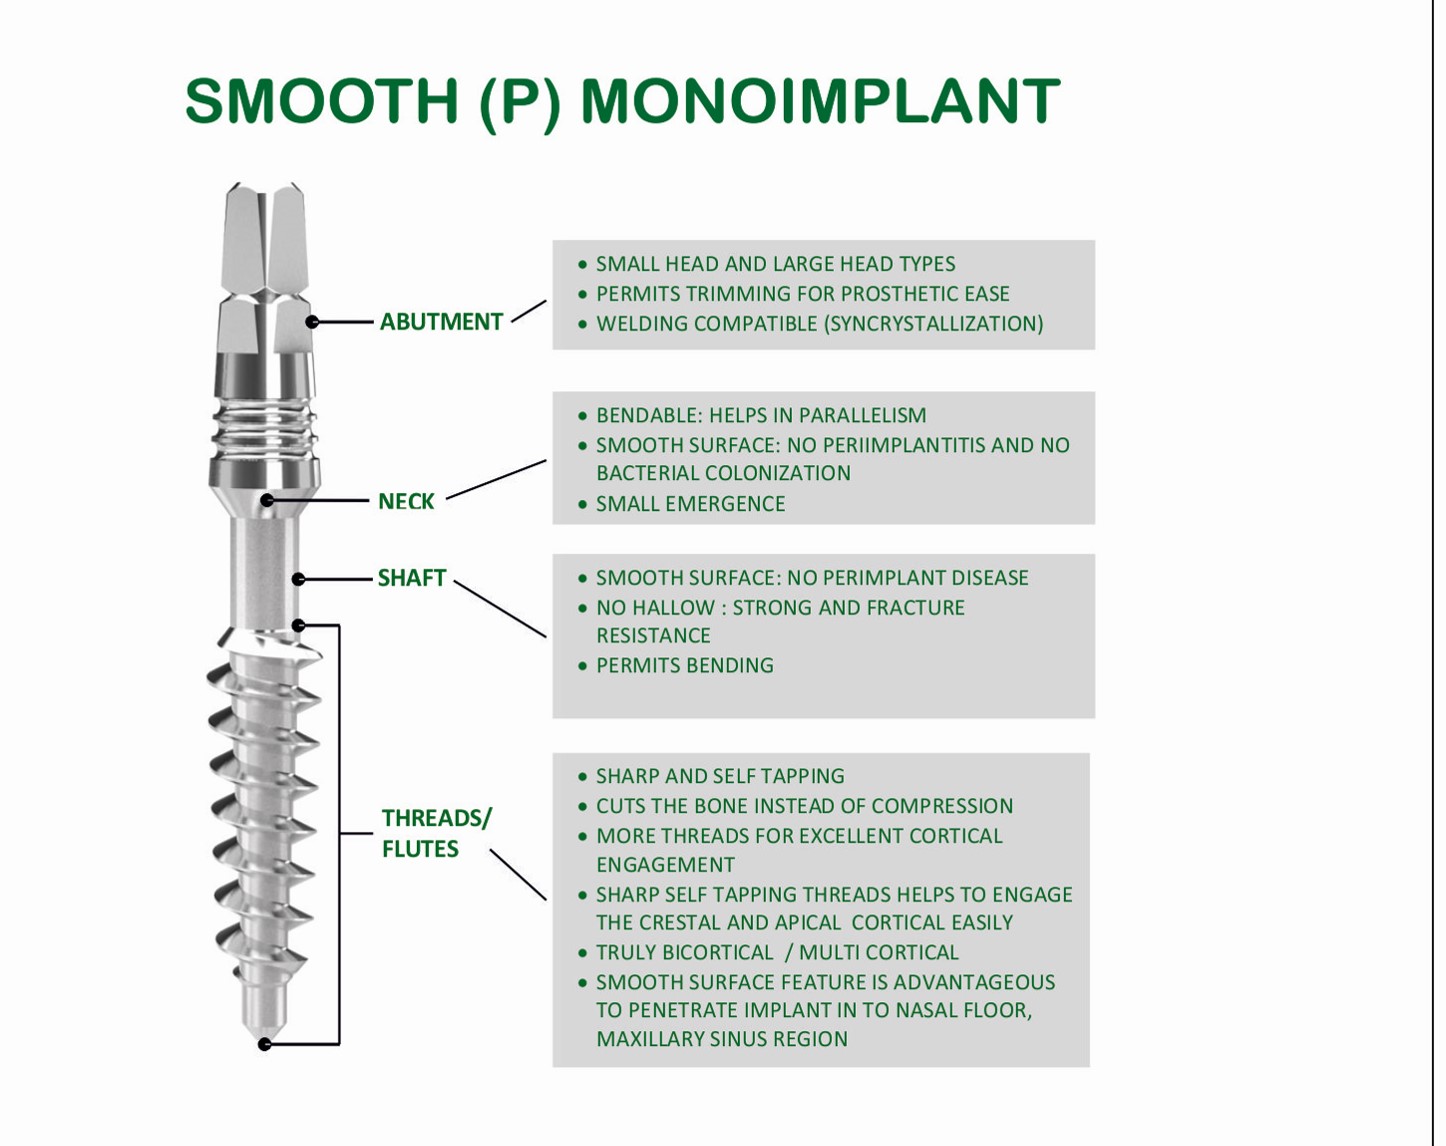 monoimplants features